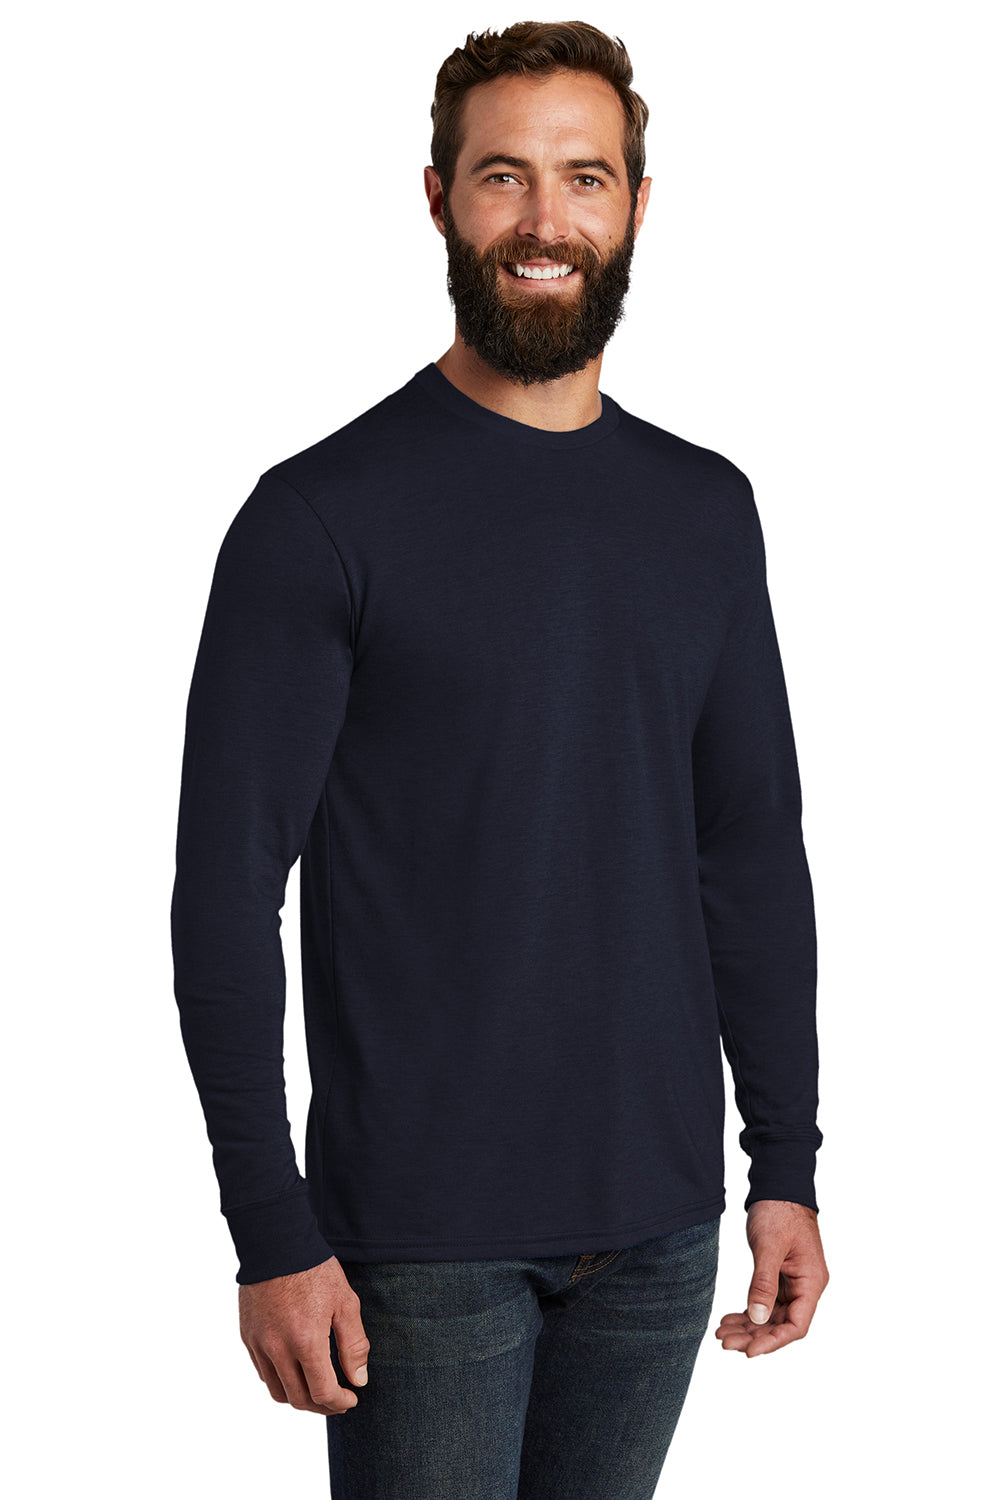 Allmade AL6004 Mens Long Sleeve Crewneck T-Shirt Night Sky Navy Blue Model 3Q